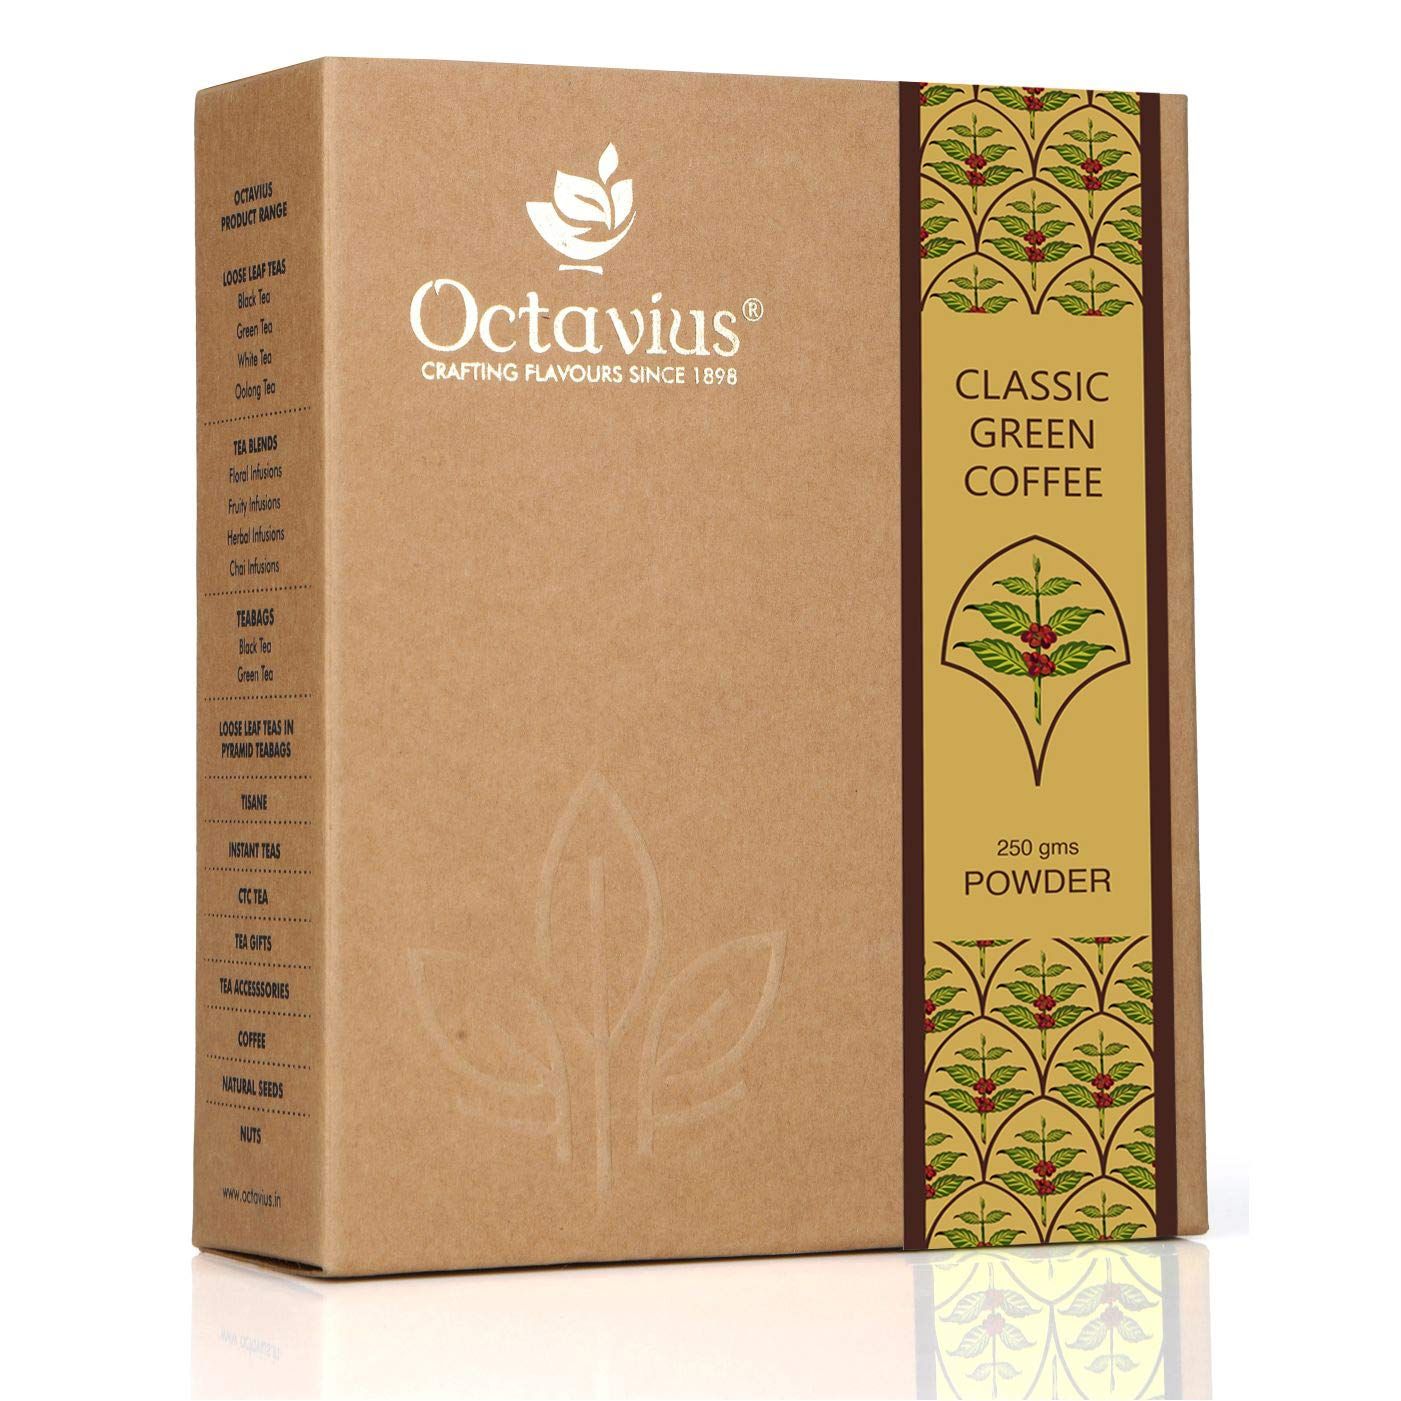 Octavis Classic Green Coffee Image